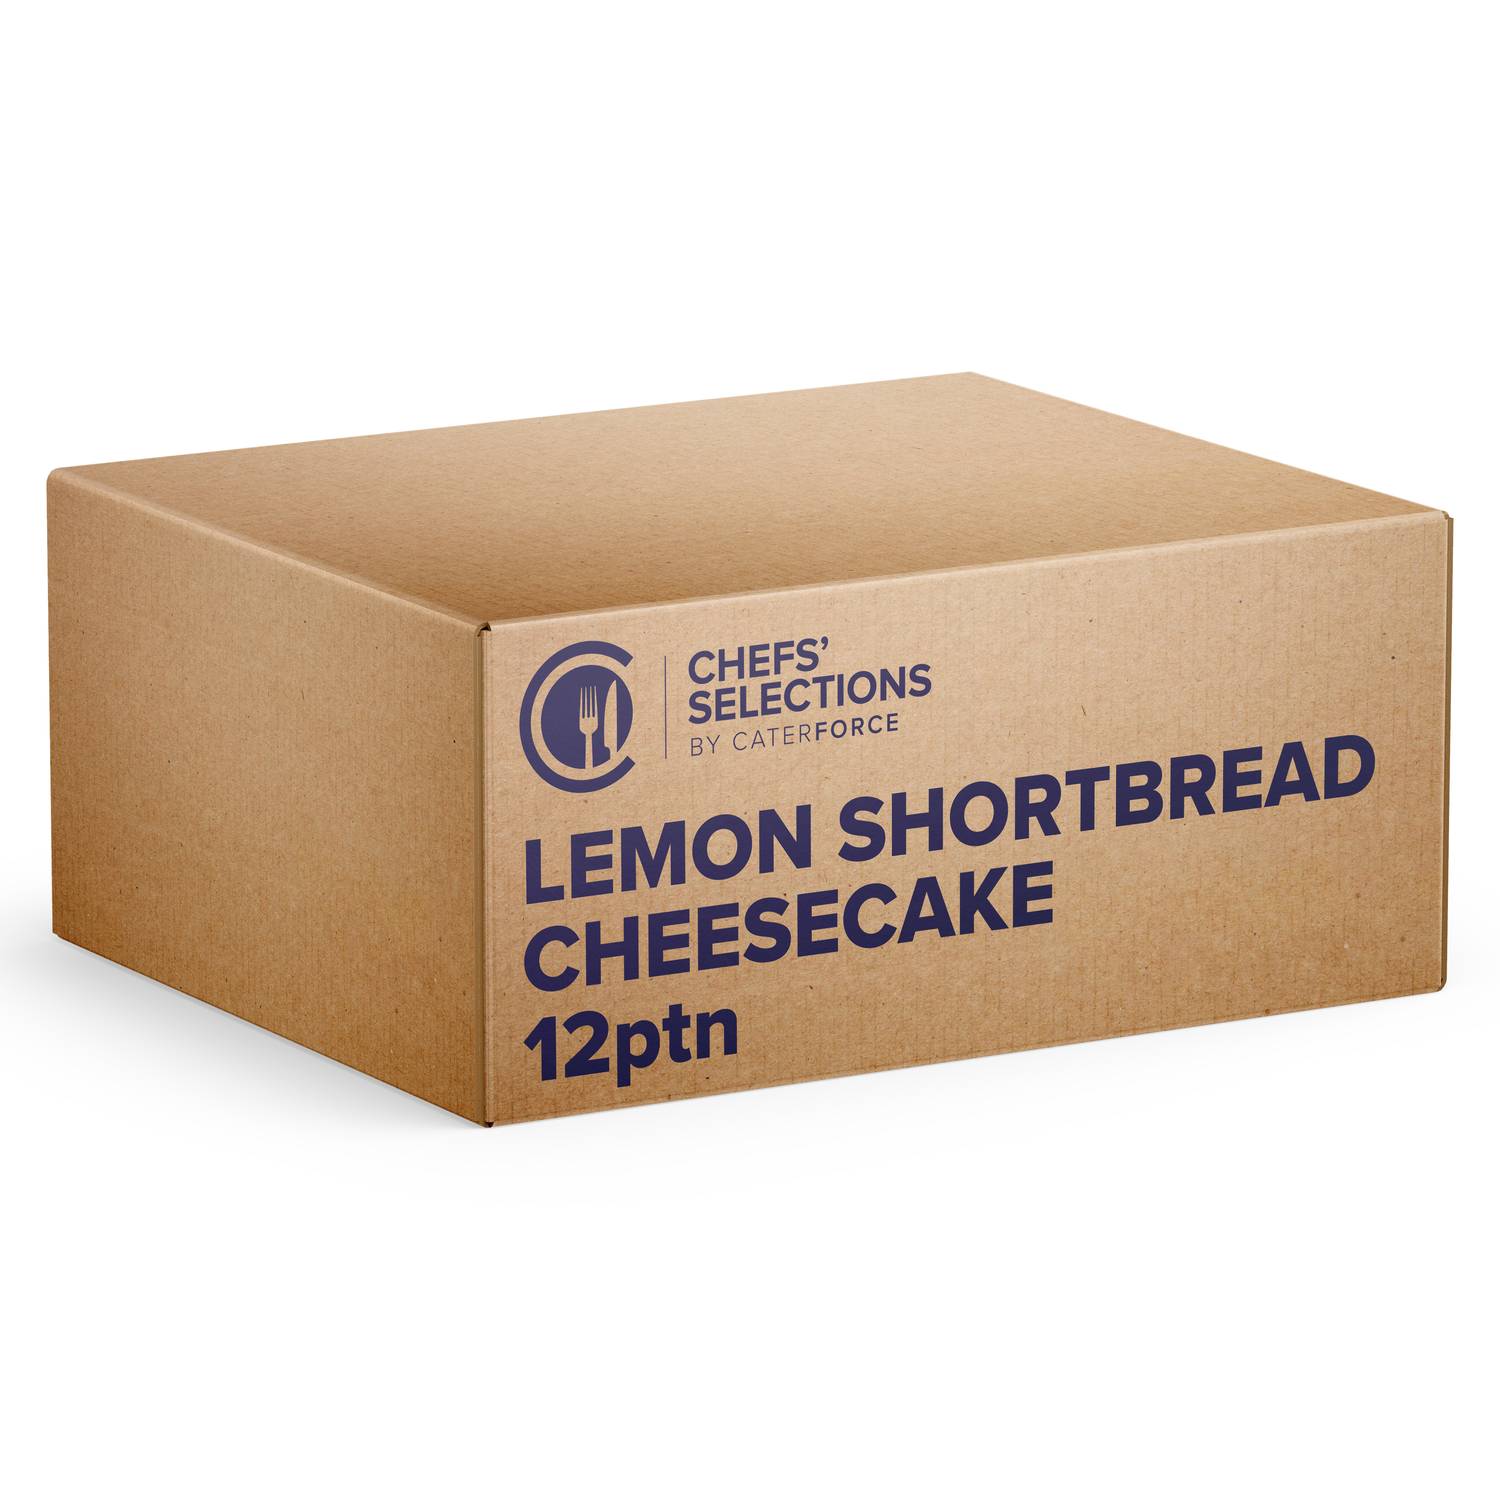 Chefs’ Selections Lemon Shortbread Cheesecake (1 x 12p/ptn)